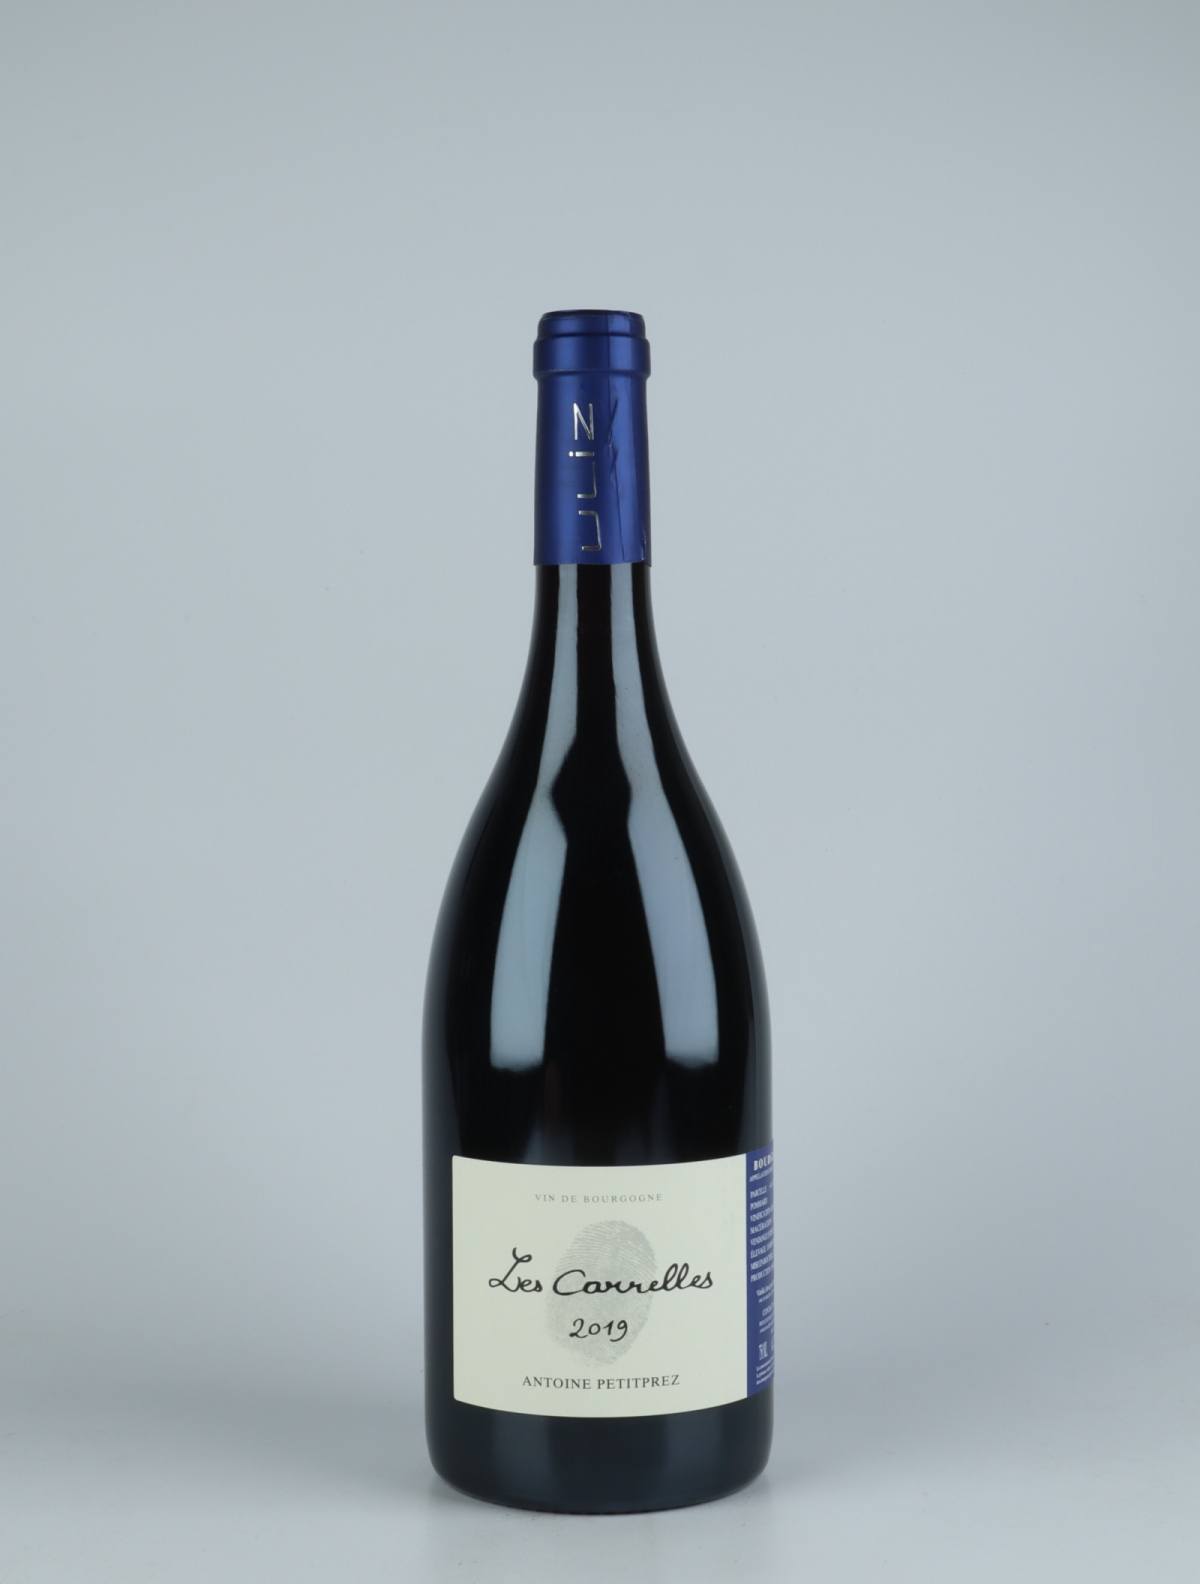 A bottle 2019 Les Carelles Red wine from Antoine Petitprez, Burgundy in France